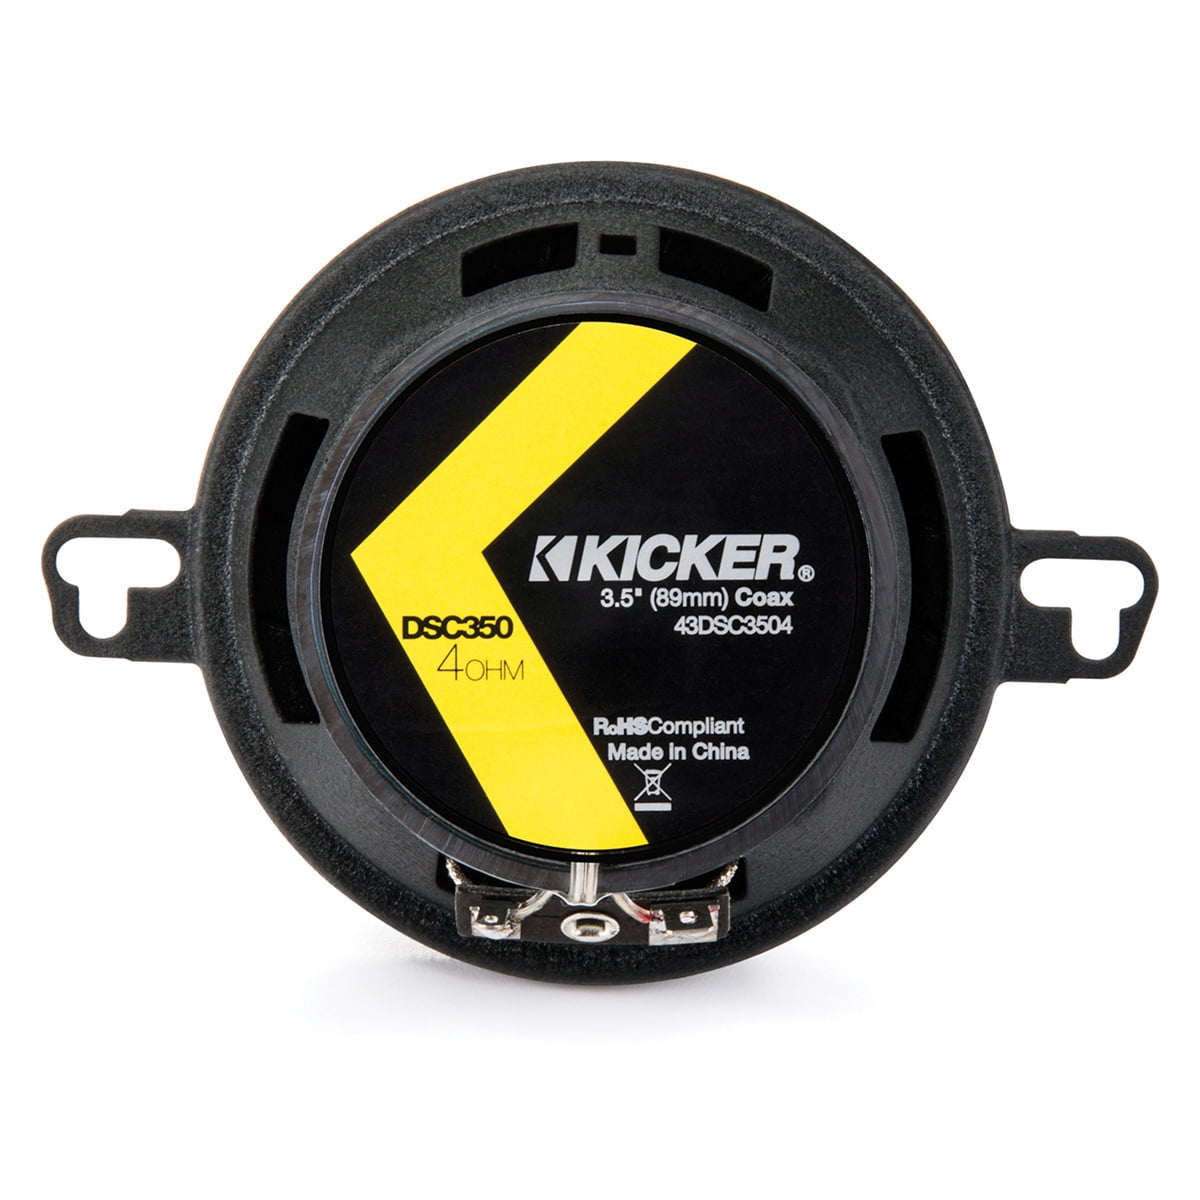 Kicker 46CSC354 CS Series 3.5-Inch 2-Way Coaxial Car Audio Speakers 2 